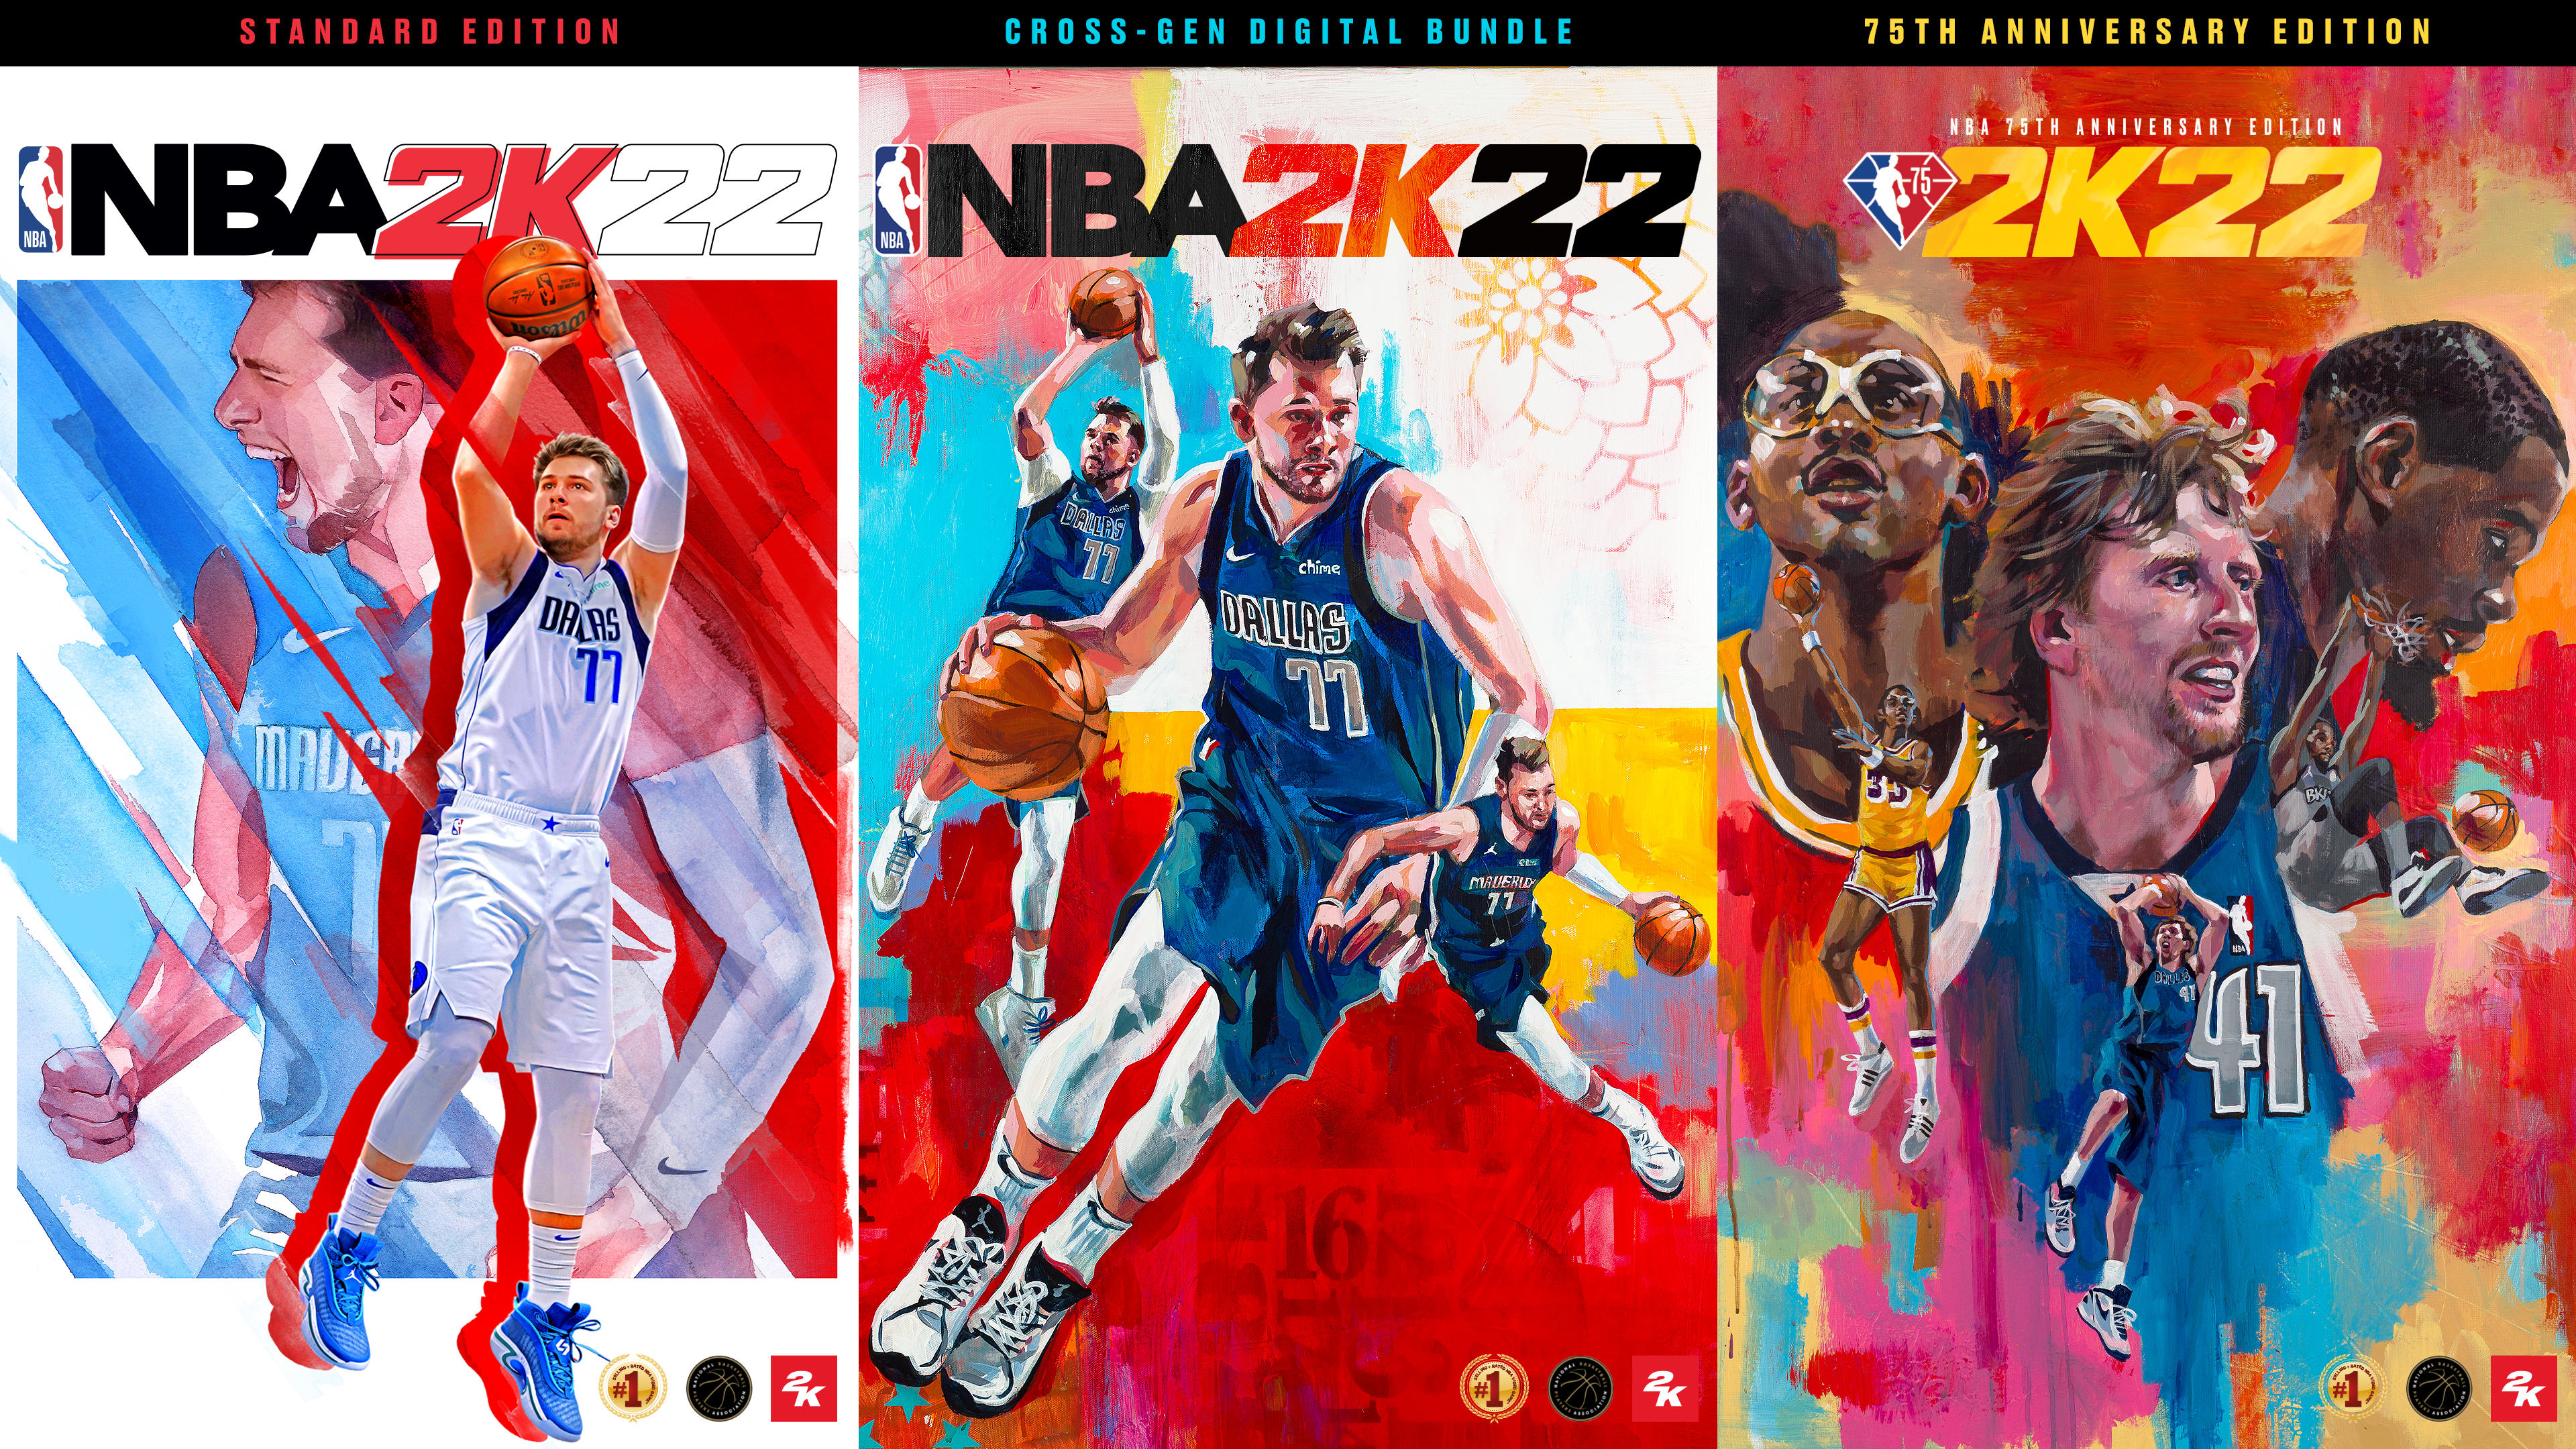 Anyone, Anywhere NBA® 2K22 Features Luka Dončić and NBA Scoring Legends – Kareem Abdul-Jabbar, Dirk Nowitzki, and Kevin Durant